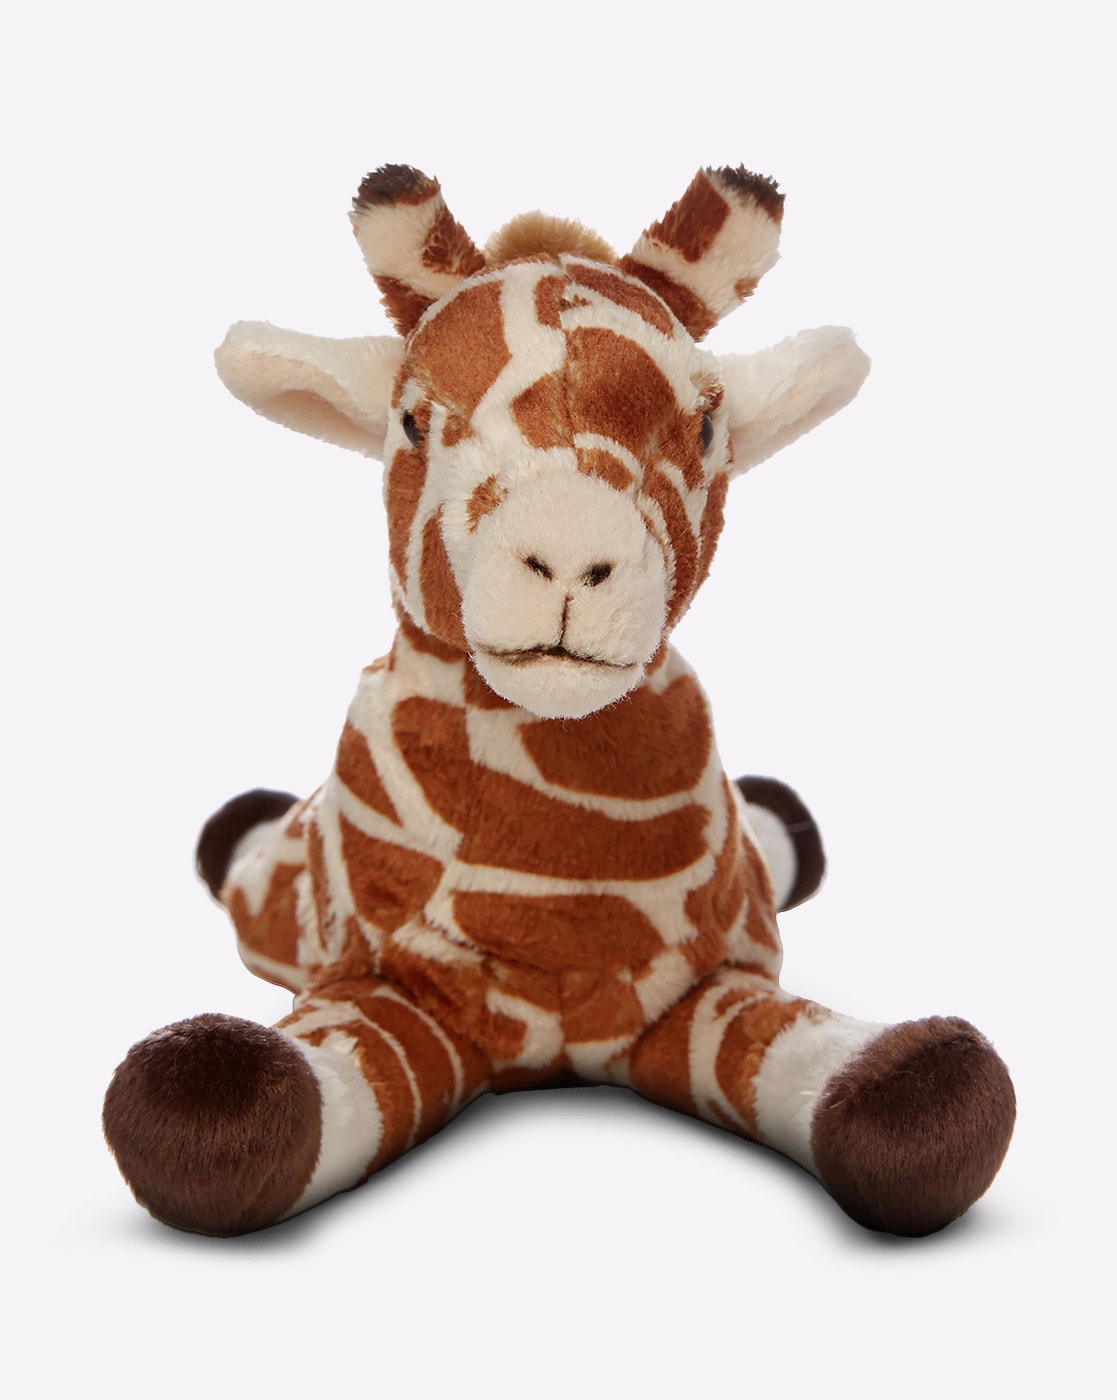 giraffe soft toys